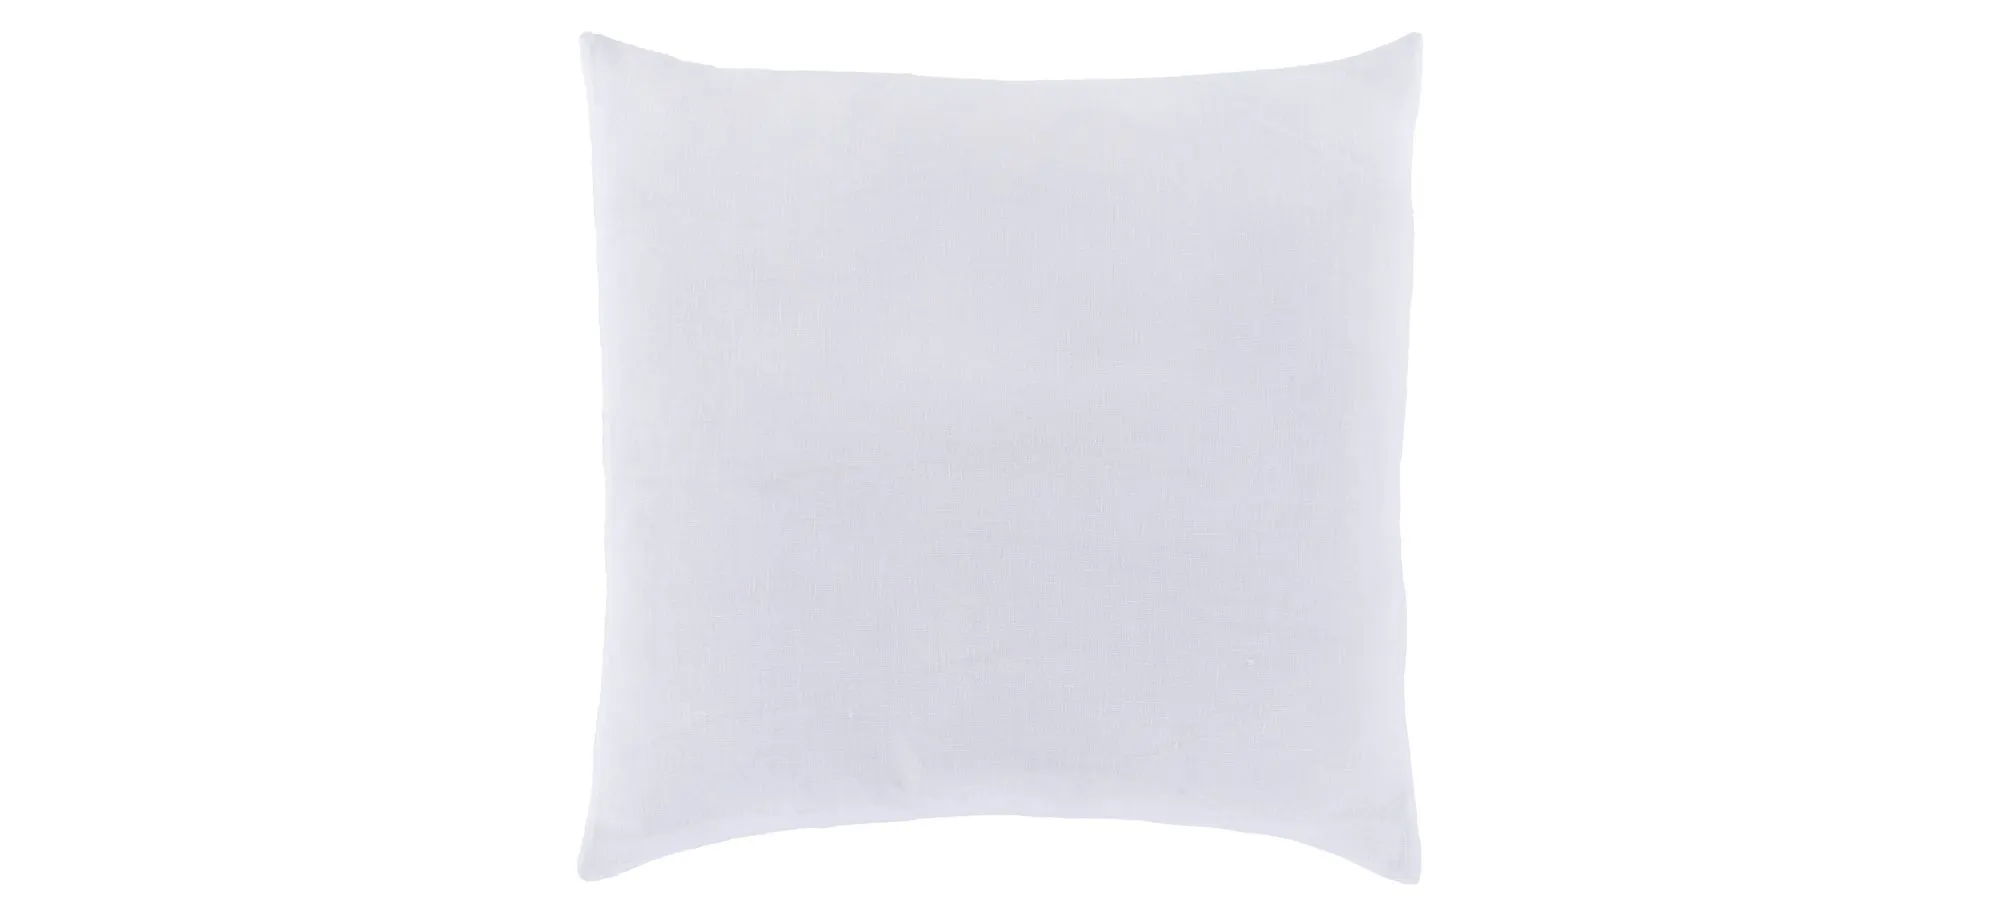 Dawson Throw Pillow in White by Surya